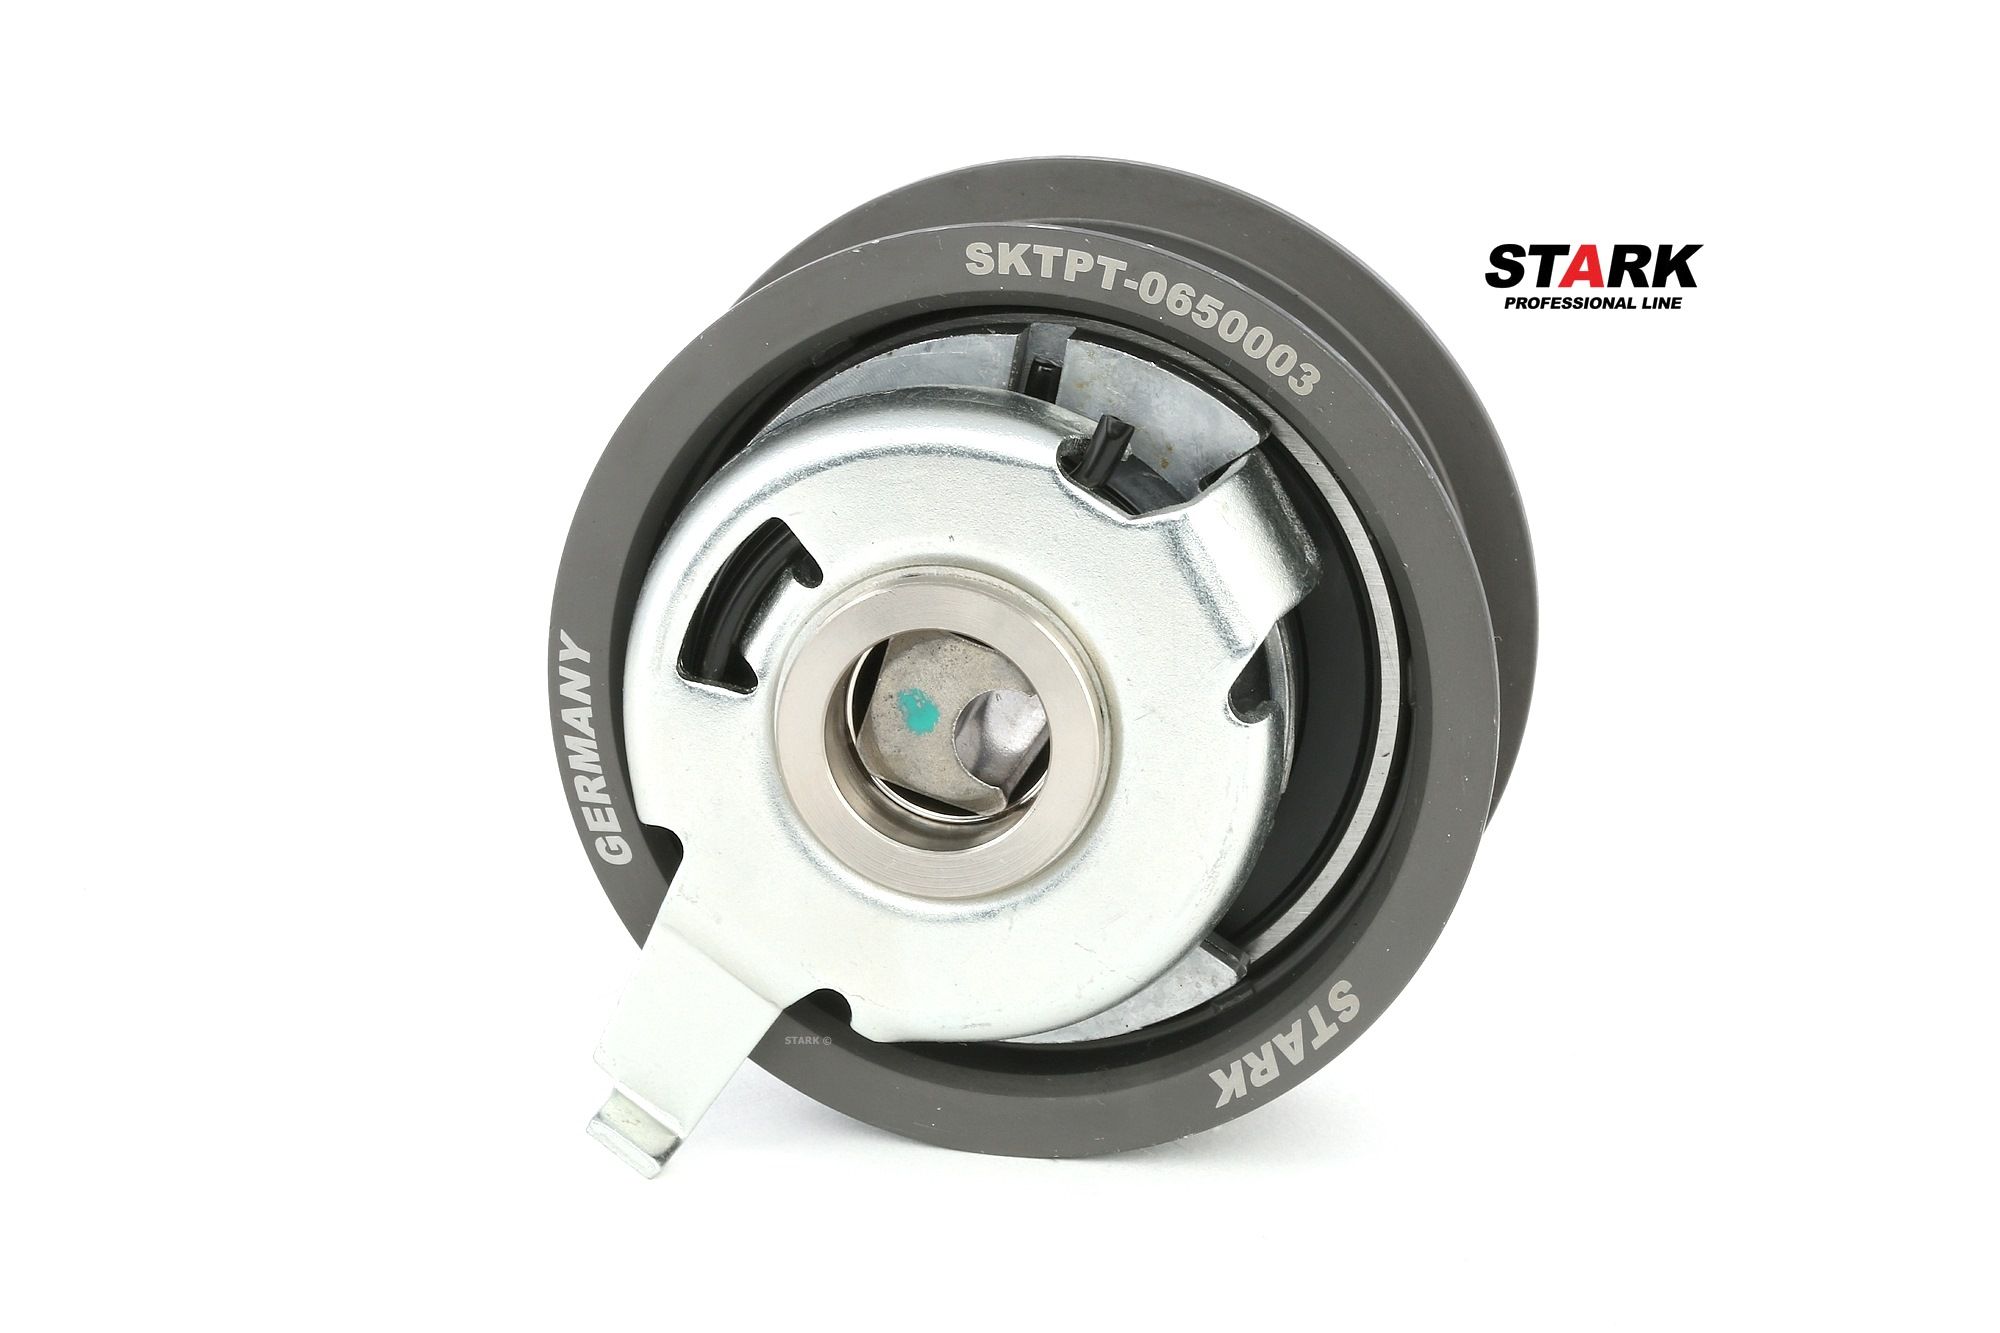 Seat Timing belt tensioner pulley STARK SKTPT-0650003 at a good price